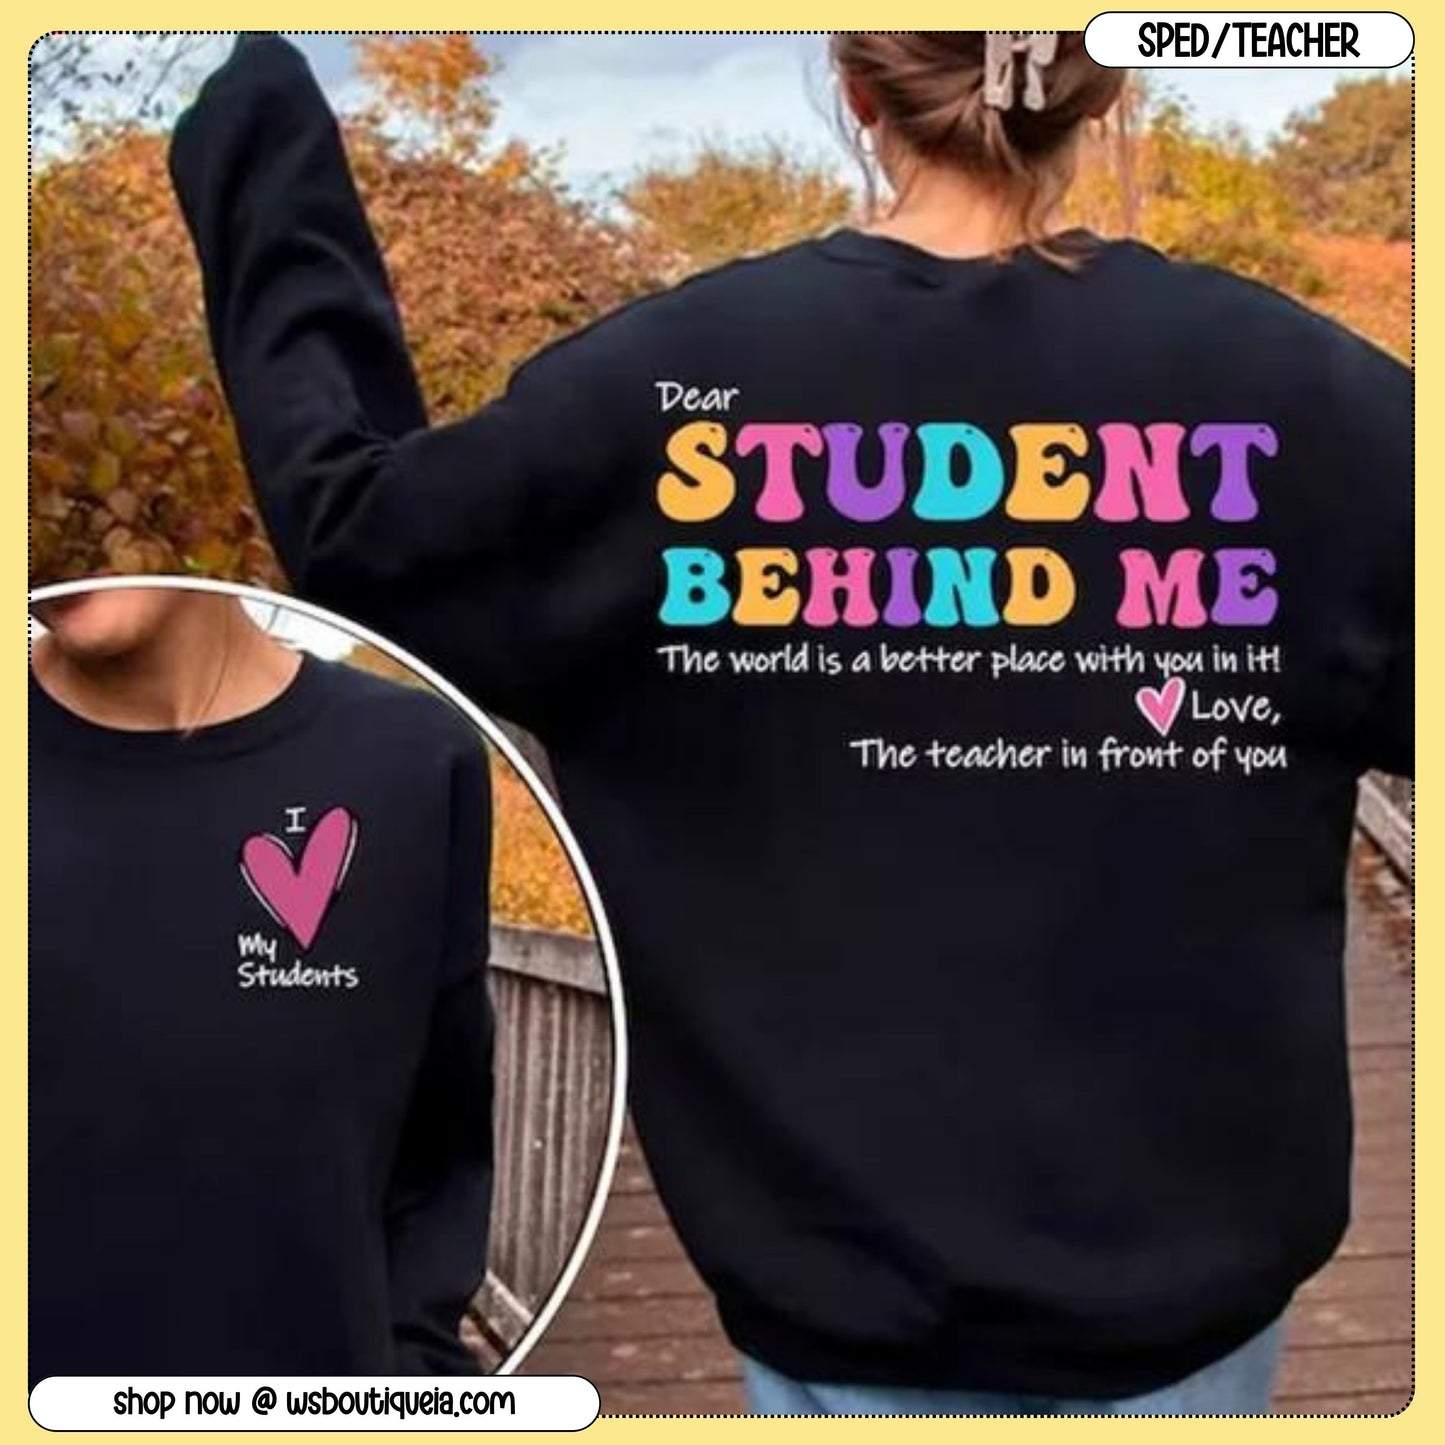 Dear Student Behind Me Tee/Sweatshirt